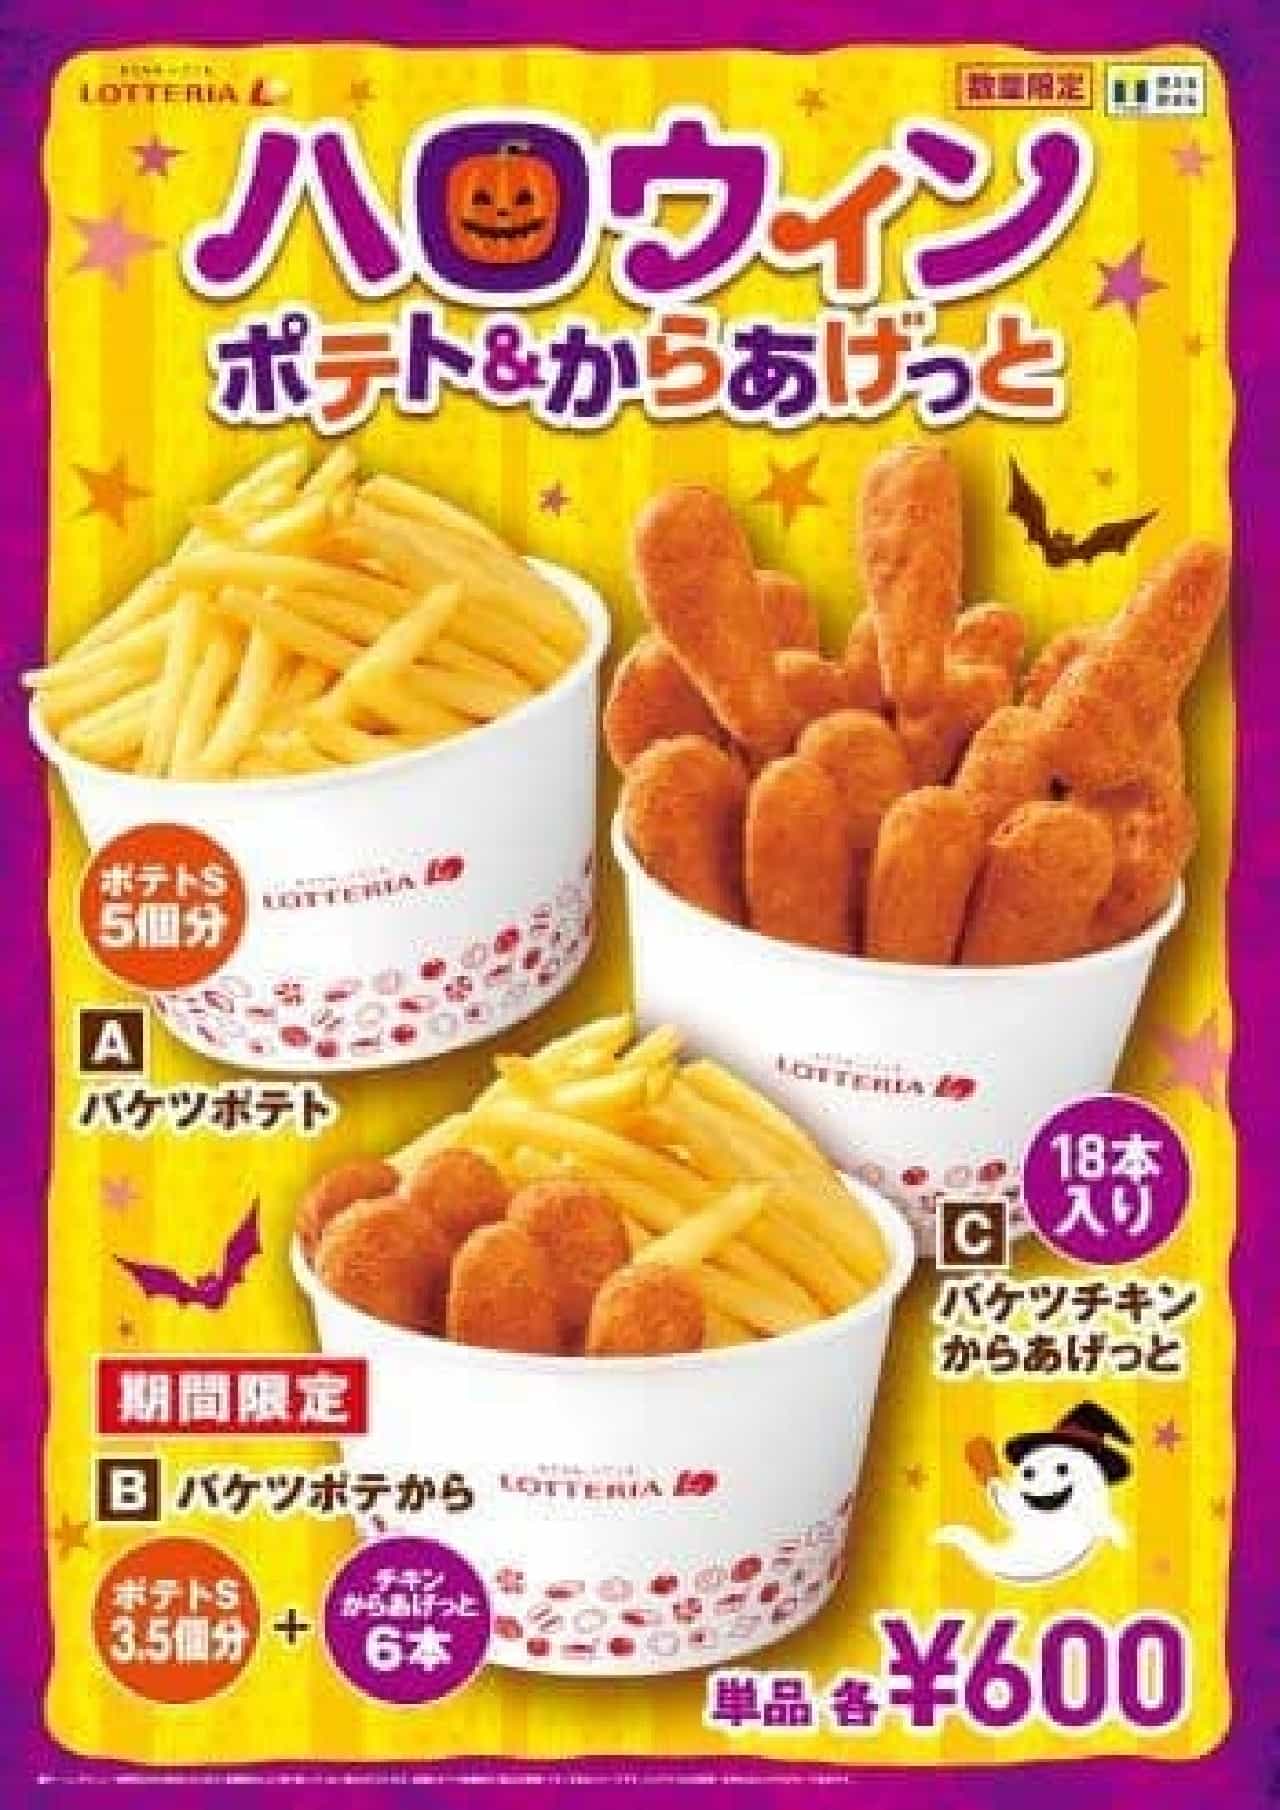 Lotteria "Halloween potatoes & fried chicken"